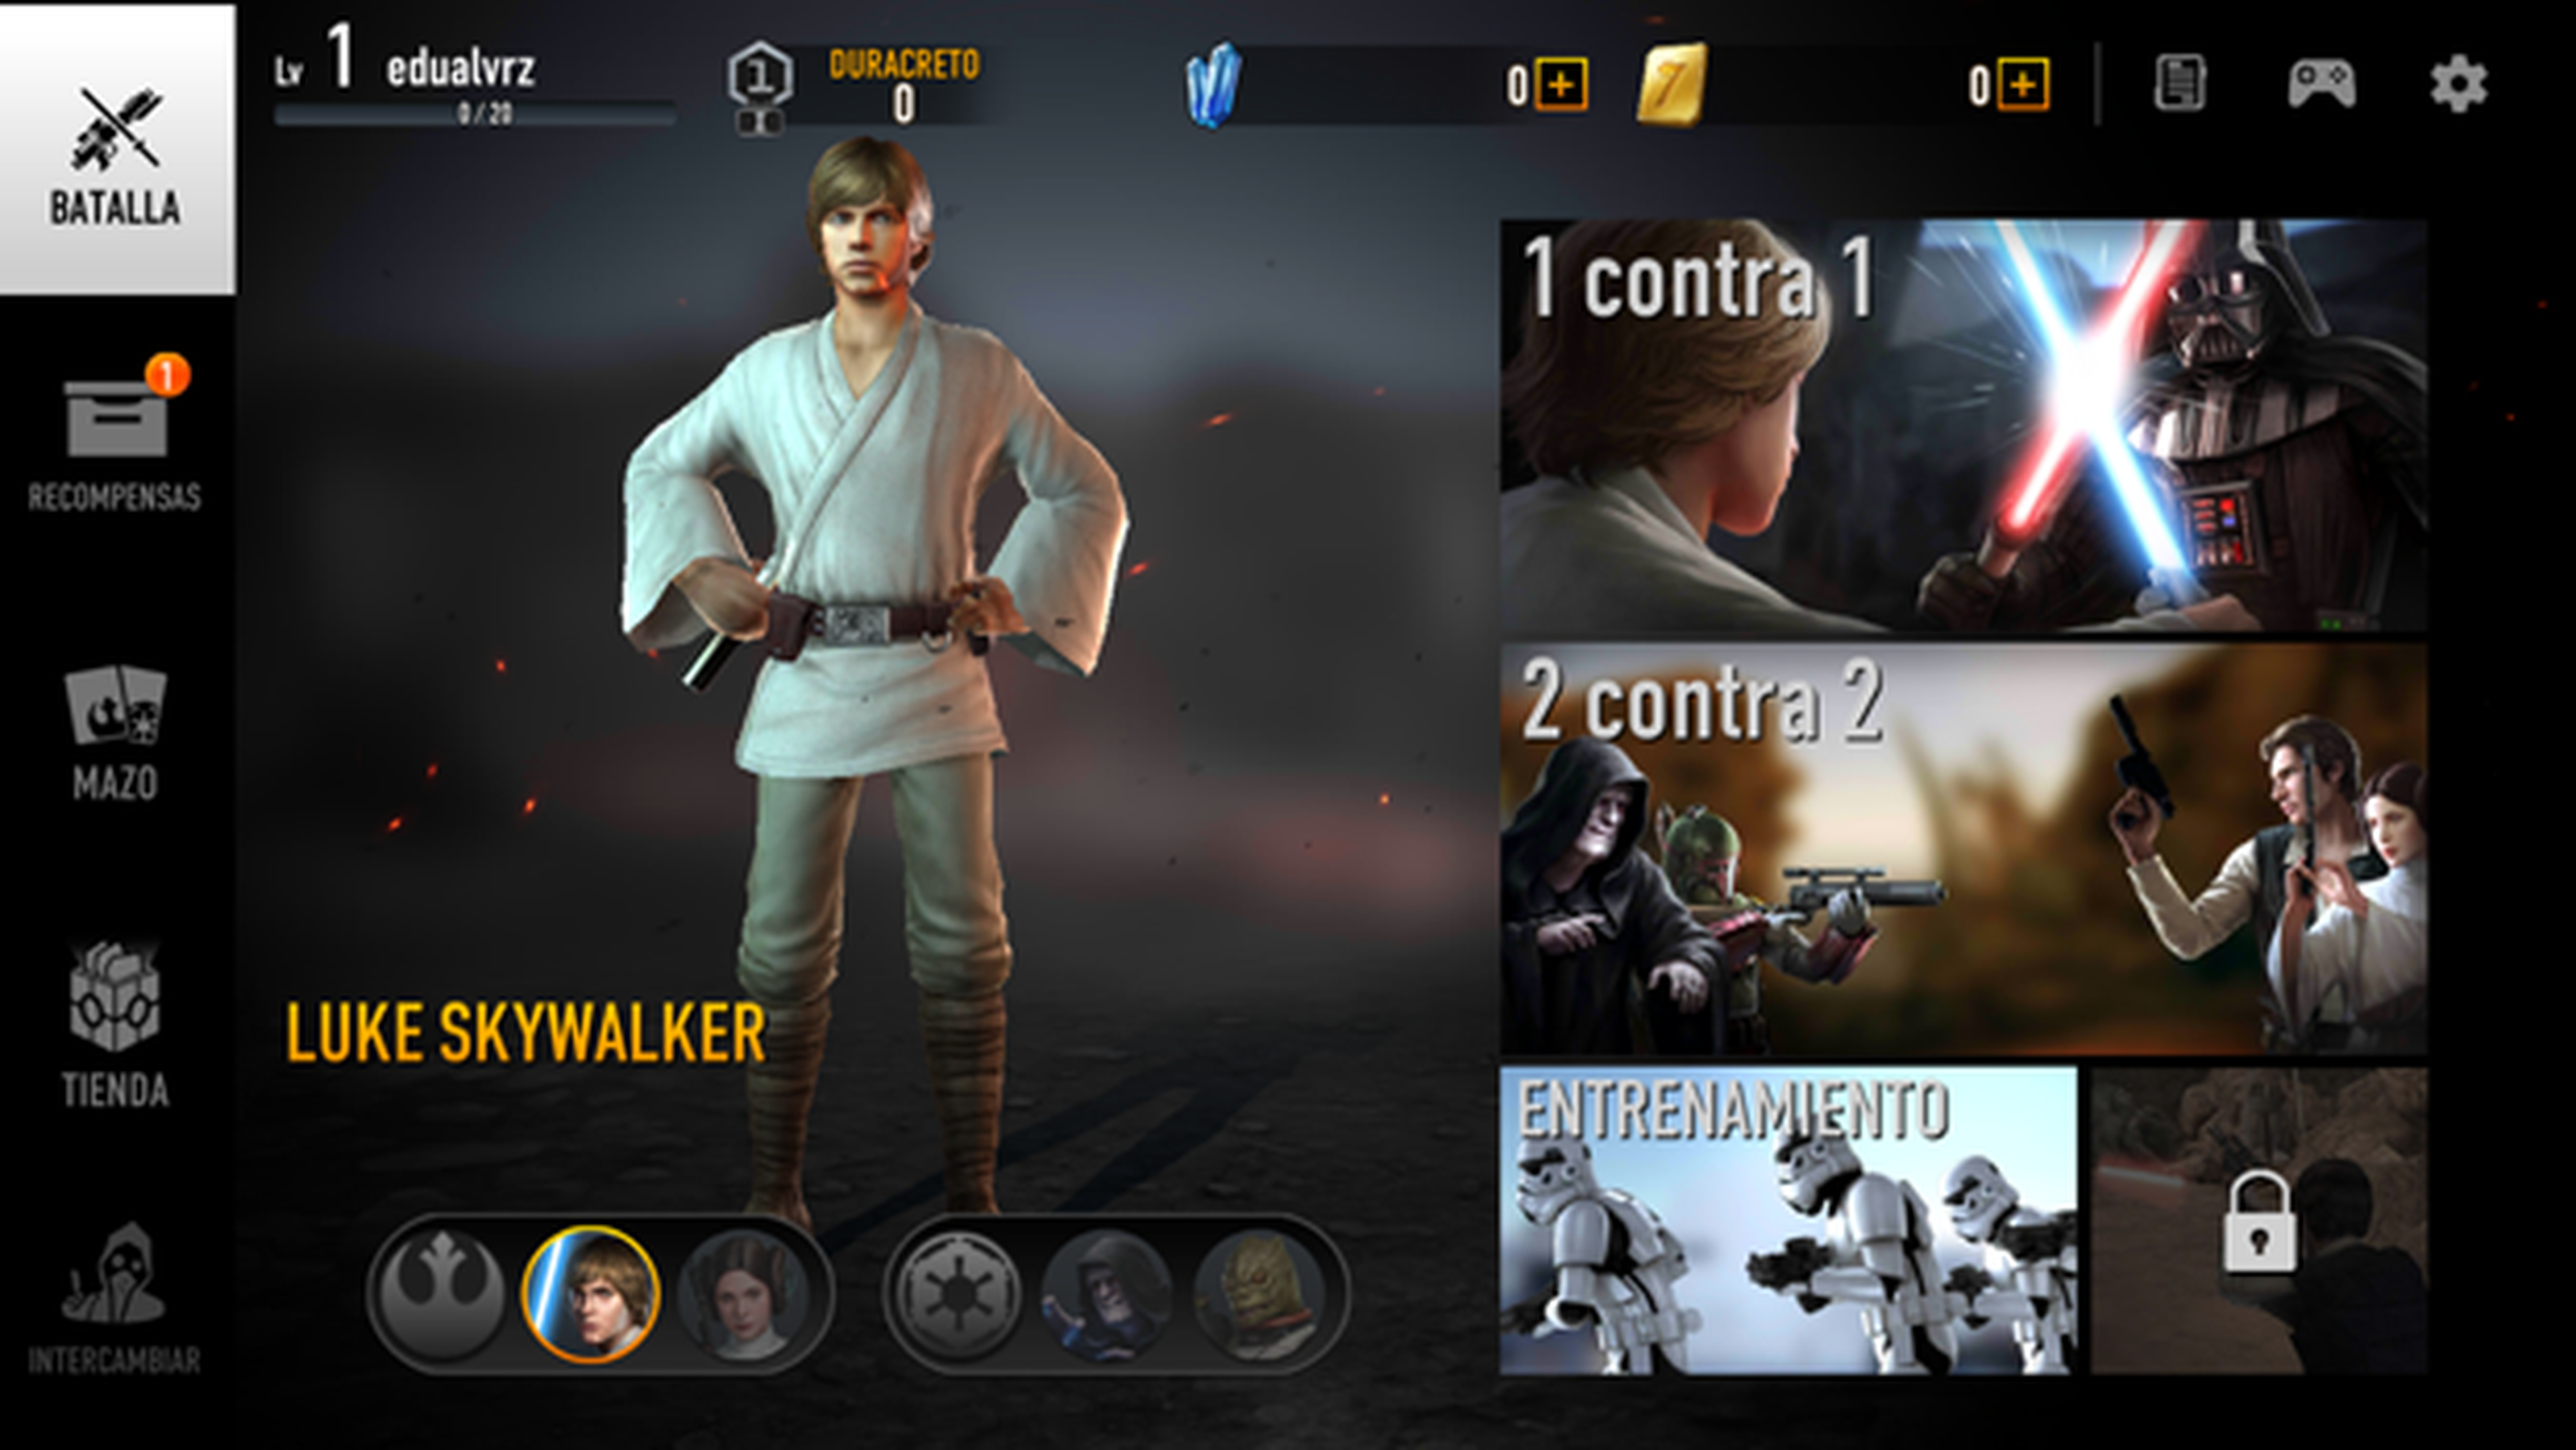 Ya puedes jugar a Star Wars: Force Arena en Android